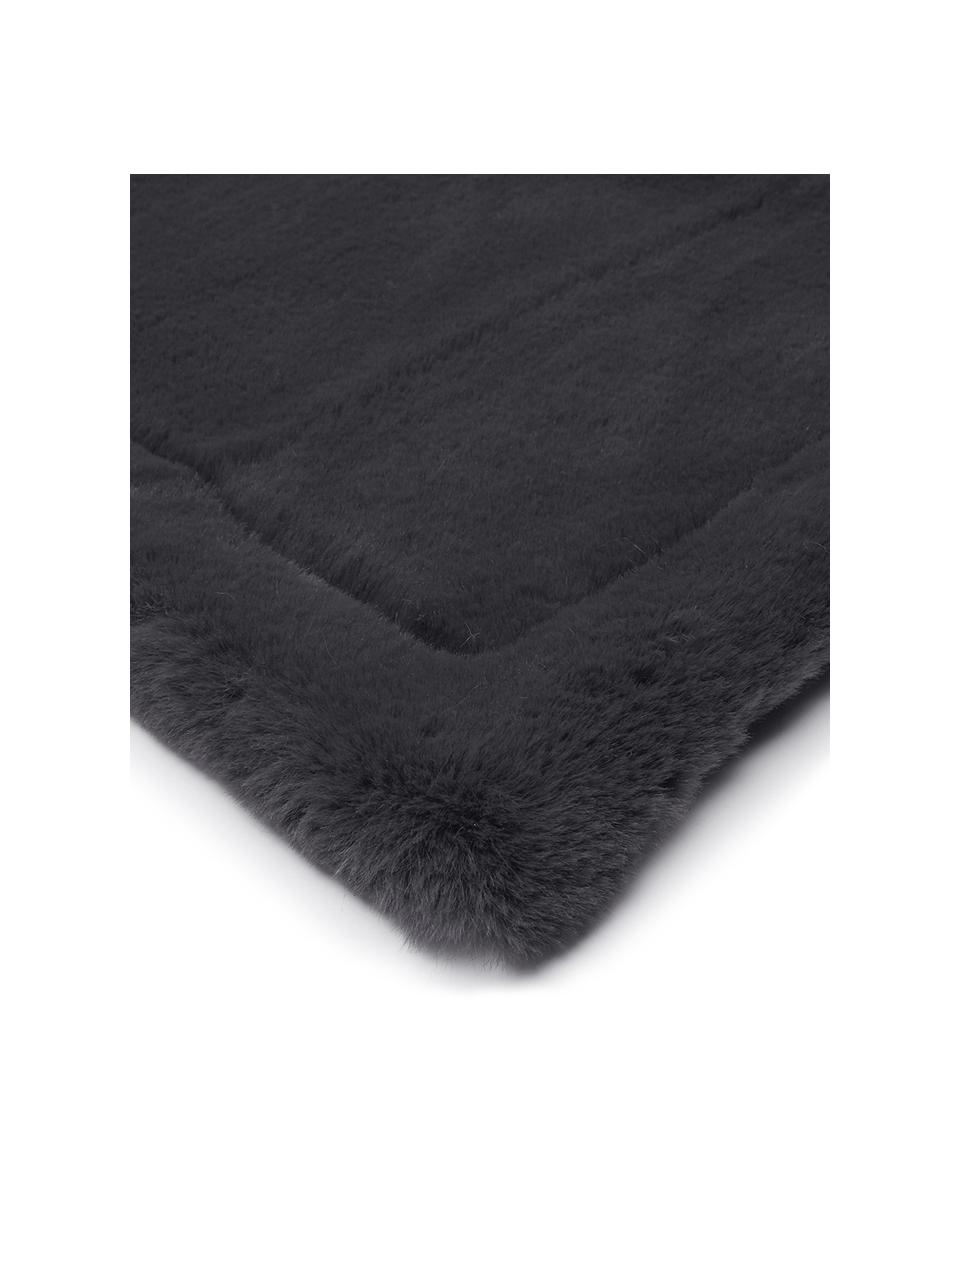 Plaid in ecopelliccia grigio scuro Mette, Retro: 100% poliestere, Grigio scuro, Larg. 150 x Lung. 200 cm